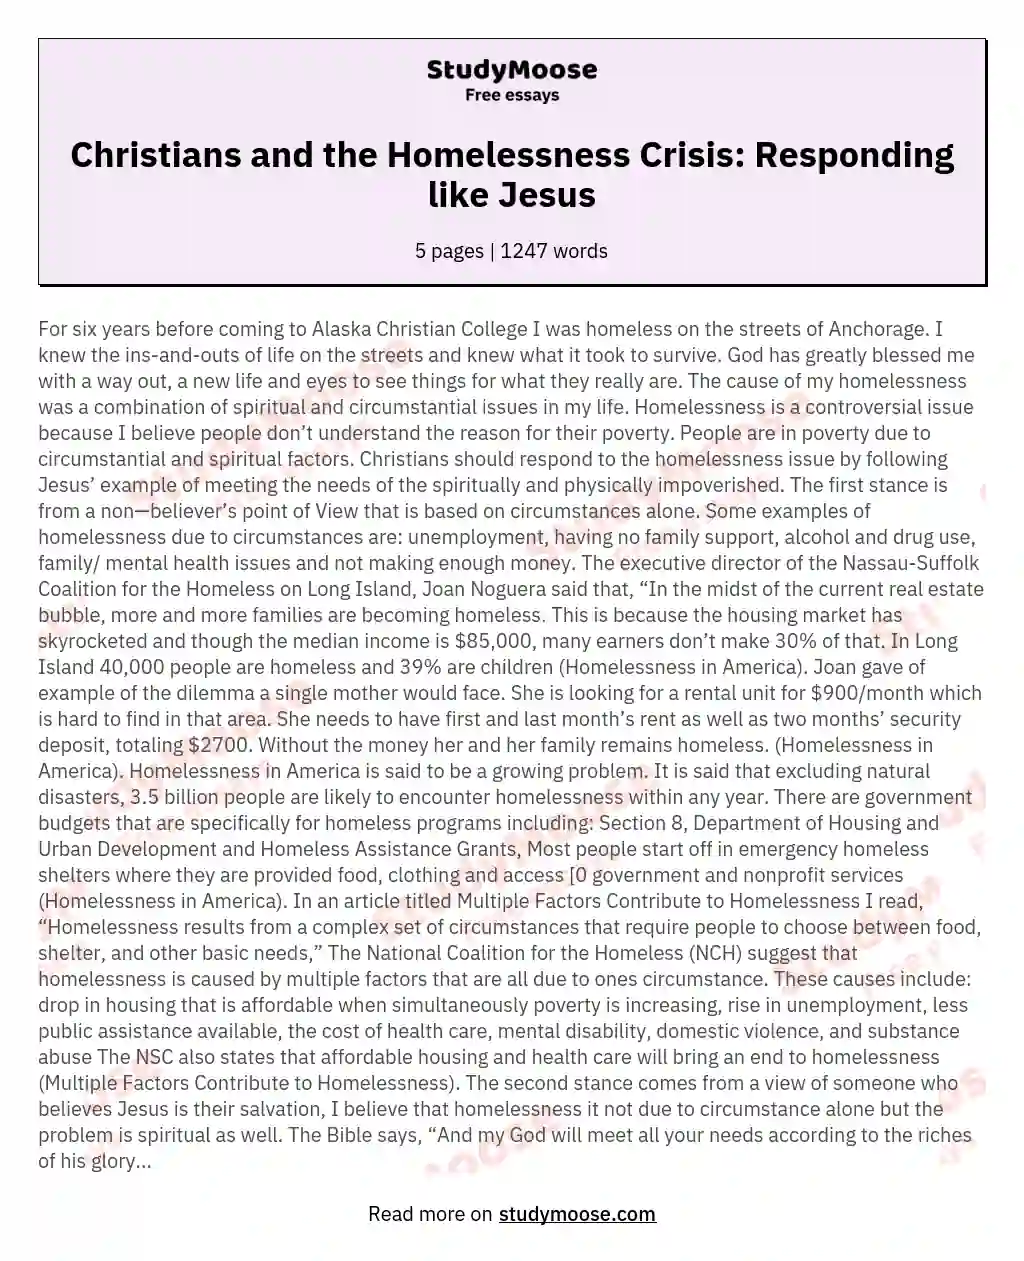 Christians and the Homelessness Crisis: Responding like Jesus essay